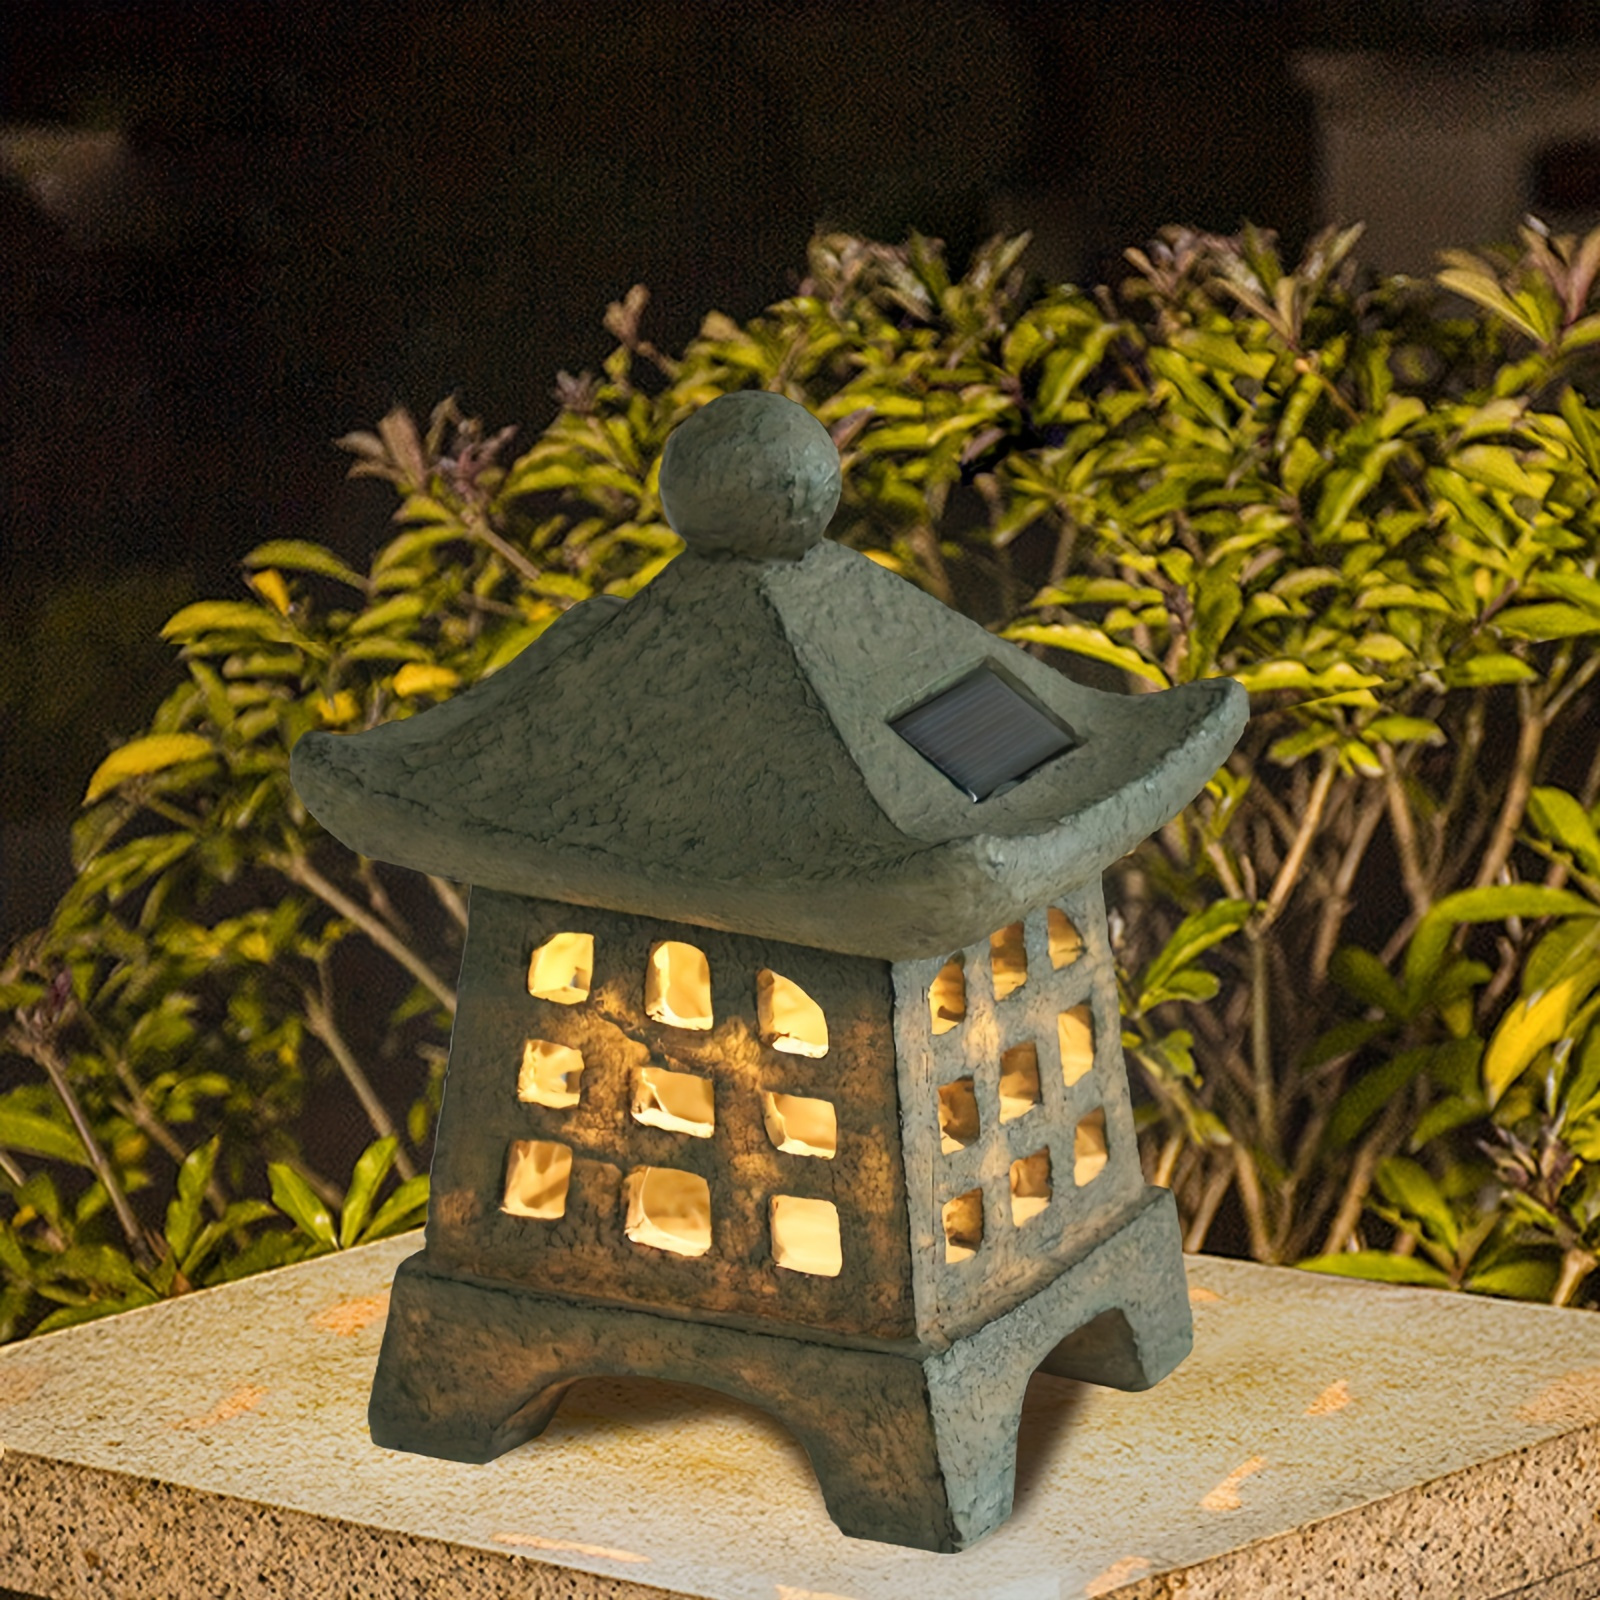 

1pc Solar-powered Led Pagoda Lantern, Resin Garden Light, Waterproof Outdoor Decorative Lamp For Lawn & Patio